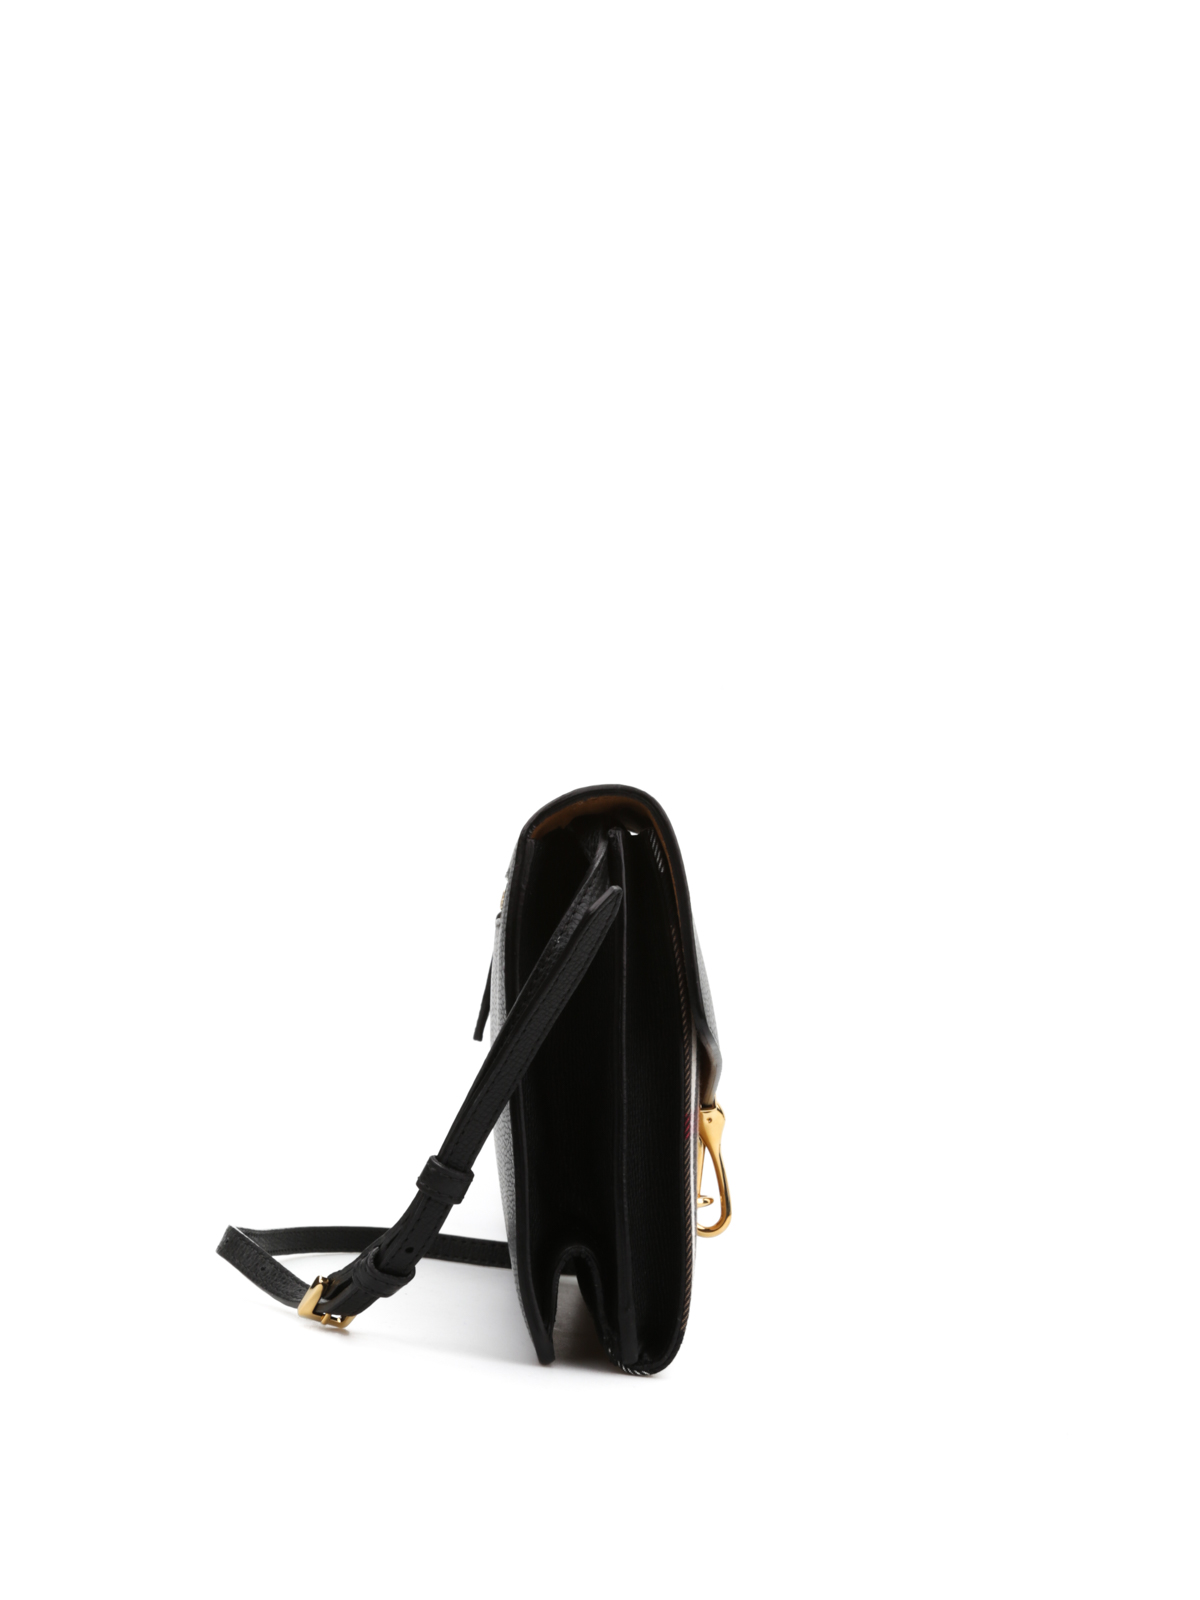 (100% NEW and AUTHENTIC) Burberry Macken Crossbody Bag - Black